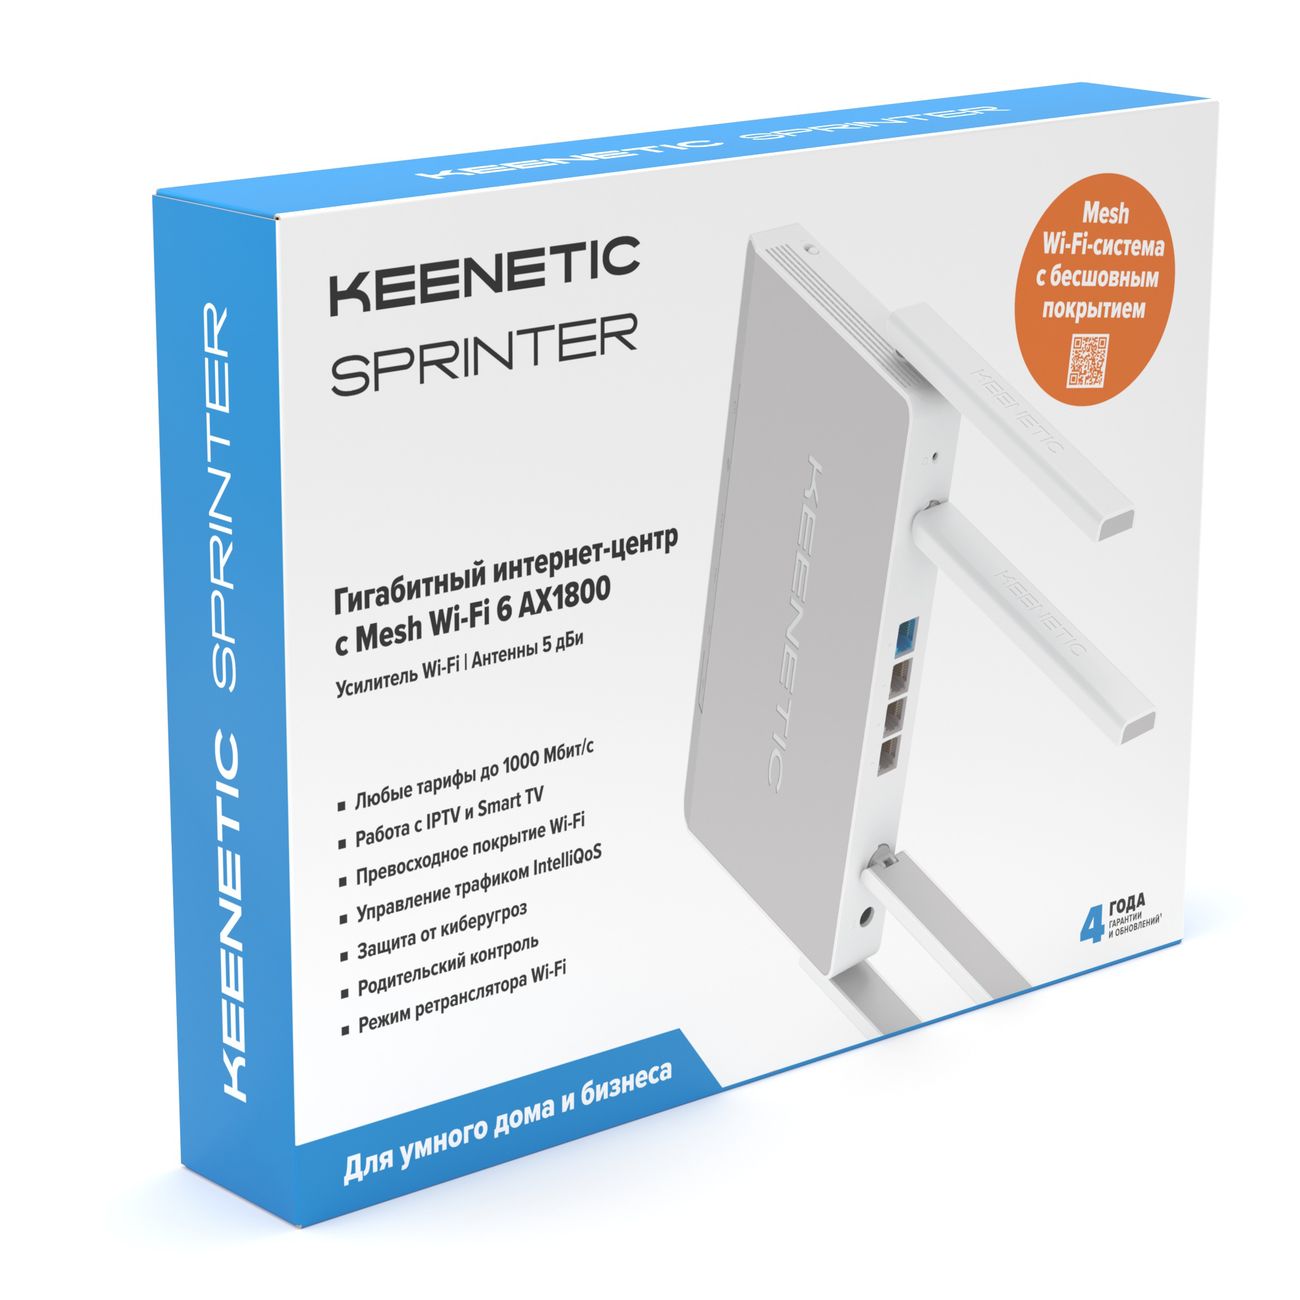 WI-FI роутер Keenetic Sprinter KN-3710 интернет-центр с Mesh Wi-Fi 6 AX1800, 4-портовым 10/100/1000